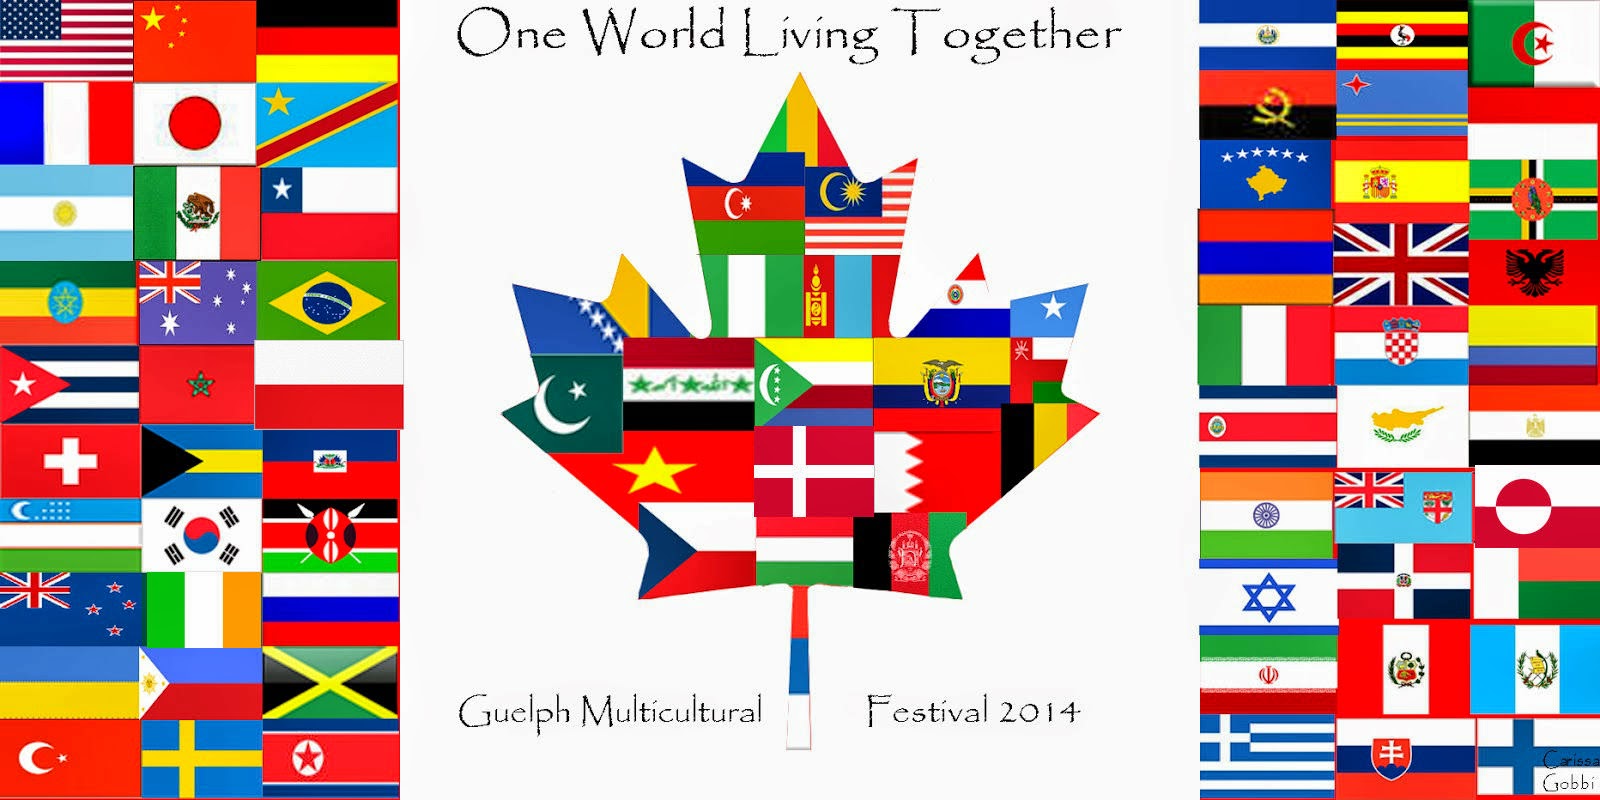 Carissa S Media Arts Guelph Multicultural Festival Poster